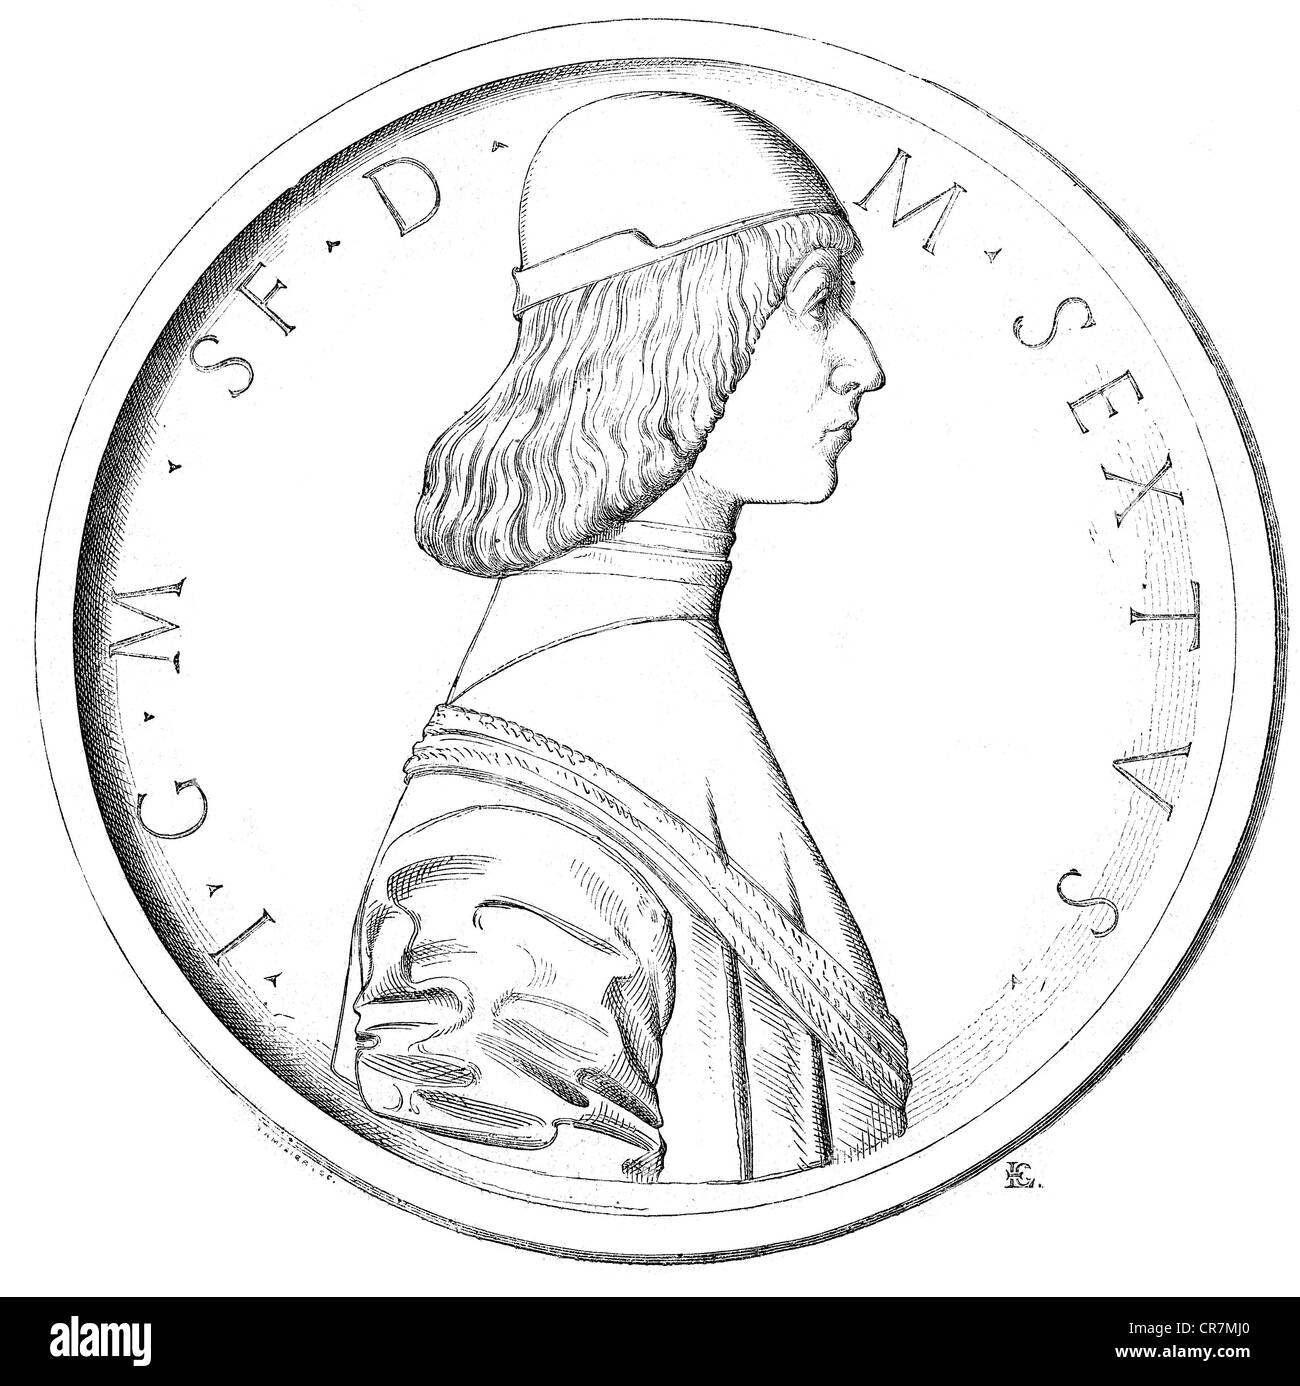 Sforza, Gian Galeazzo II, 20.6.1469 - 22.10.1494, Duke of Milan 26.12.1476 - 22.10.1494, portrait, wood engraving, 19th century, after medallion, 15th century, Stock Photo